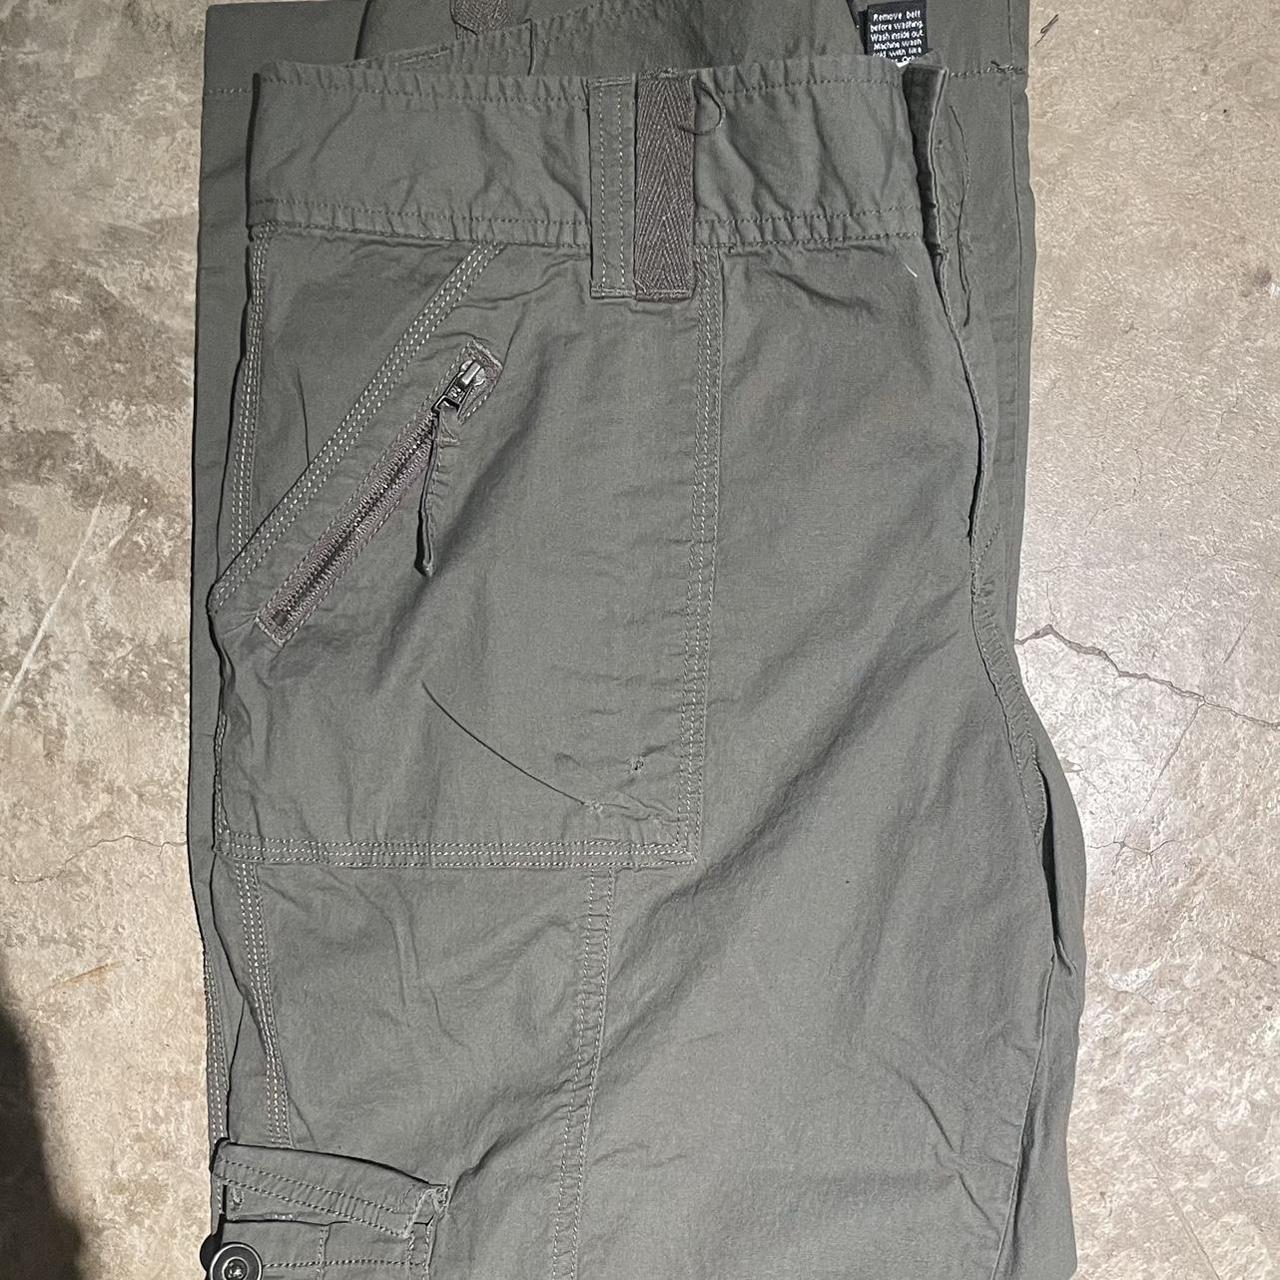 apt 9 woman’s cargo pants size 14 - Depop